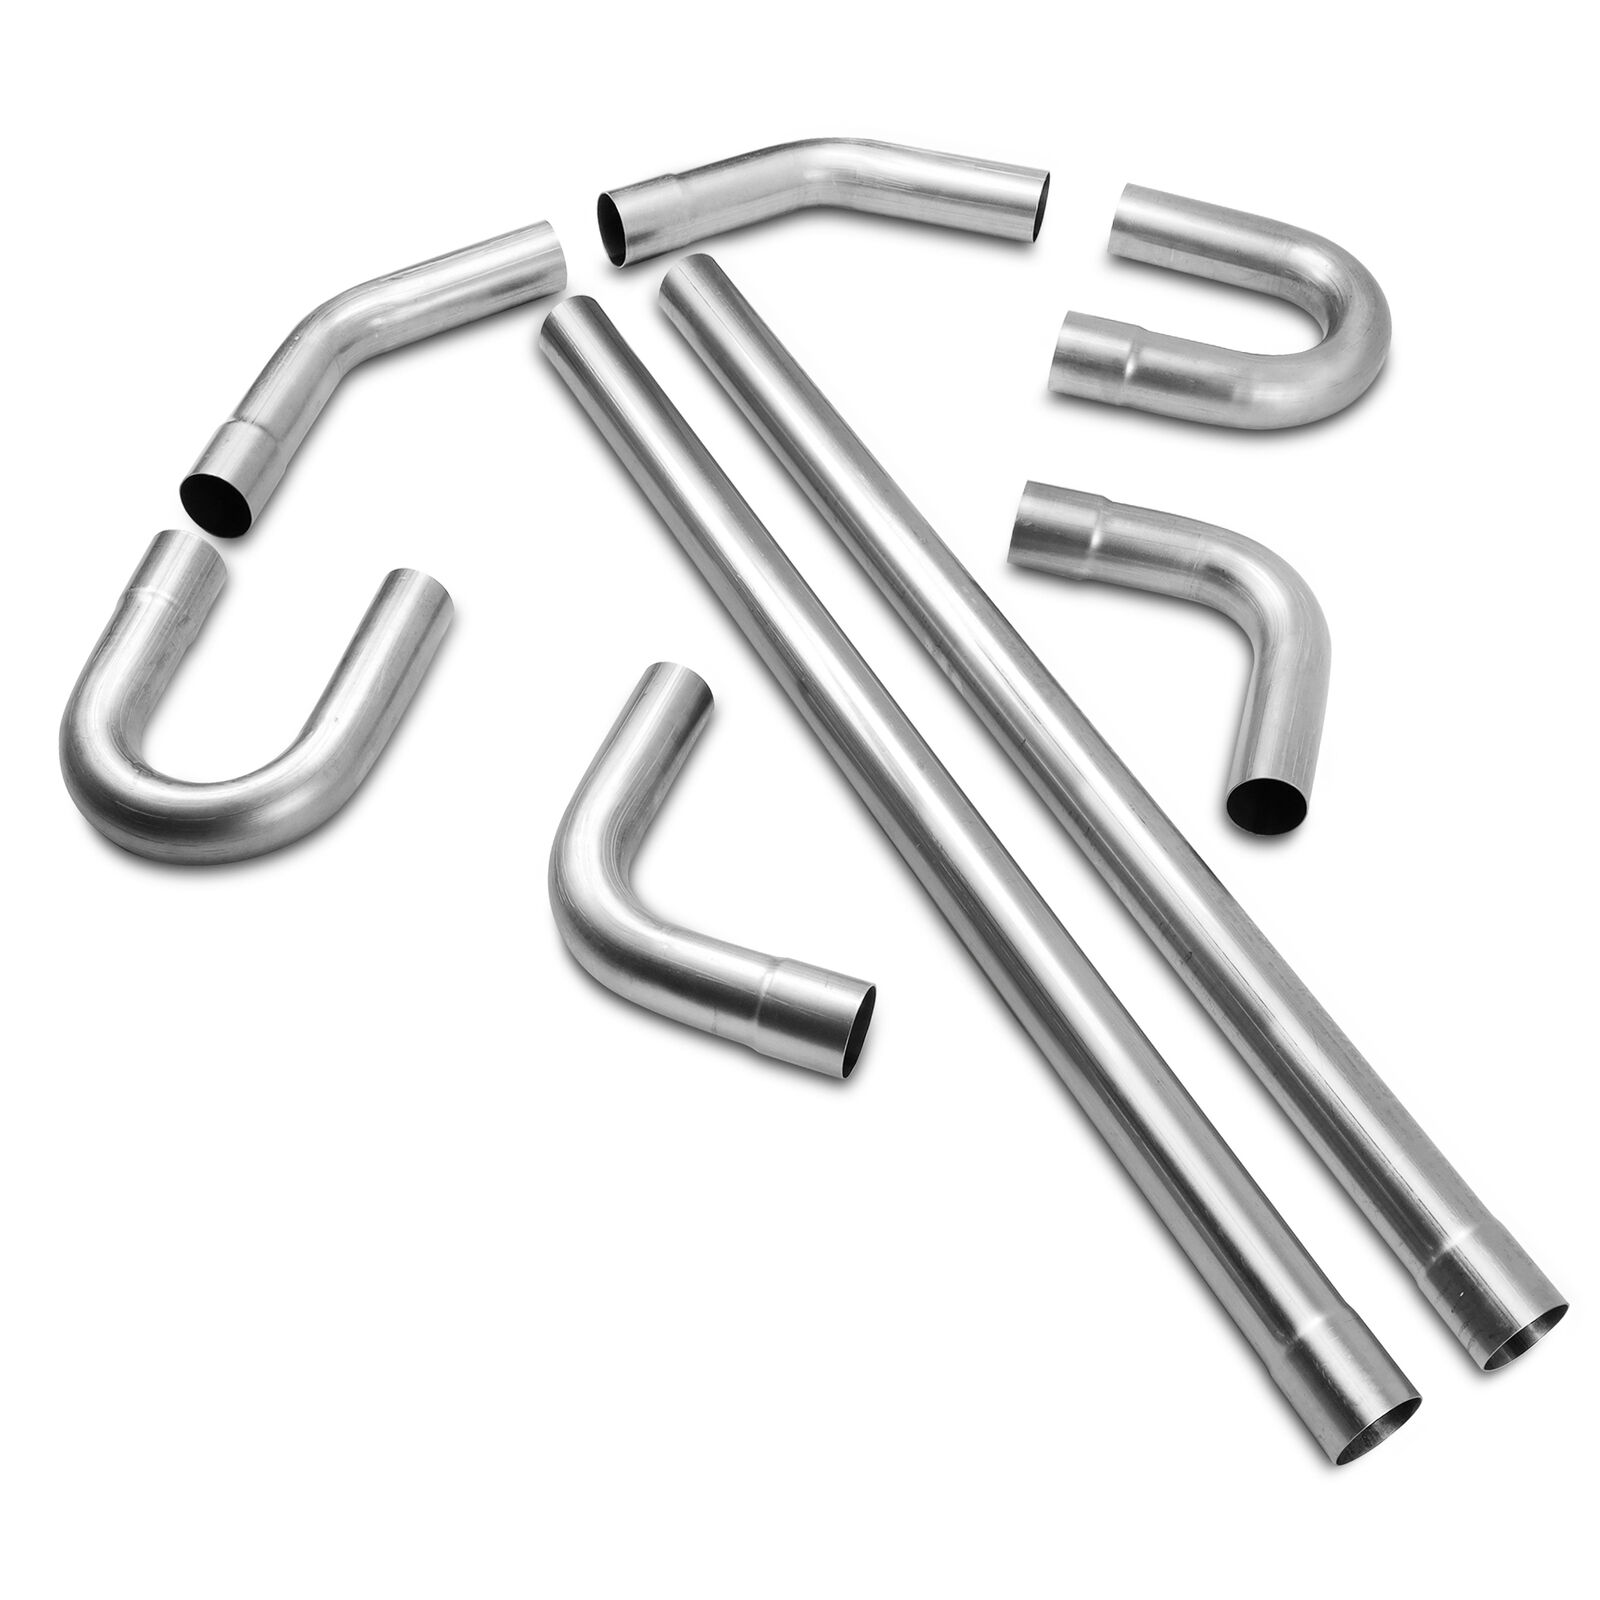 2.5” Custom Exhaust Pipe Kit Tubing Mandrel Bend Straight U-Bend 90° Piping Kit